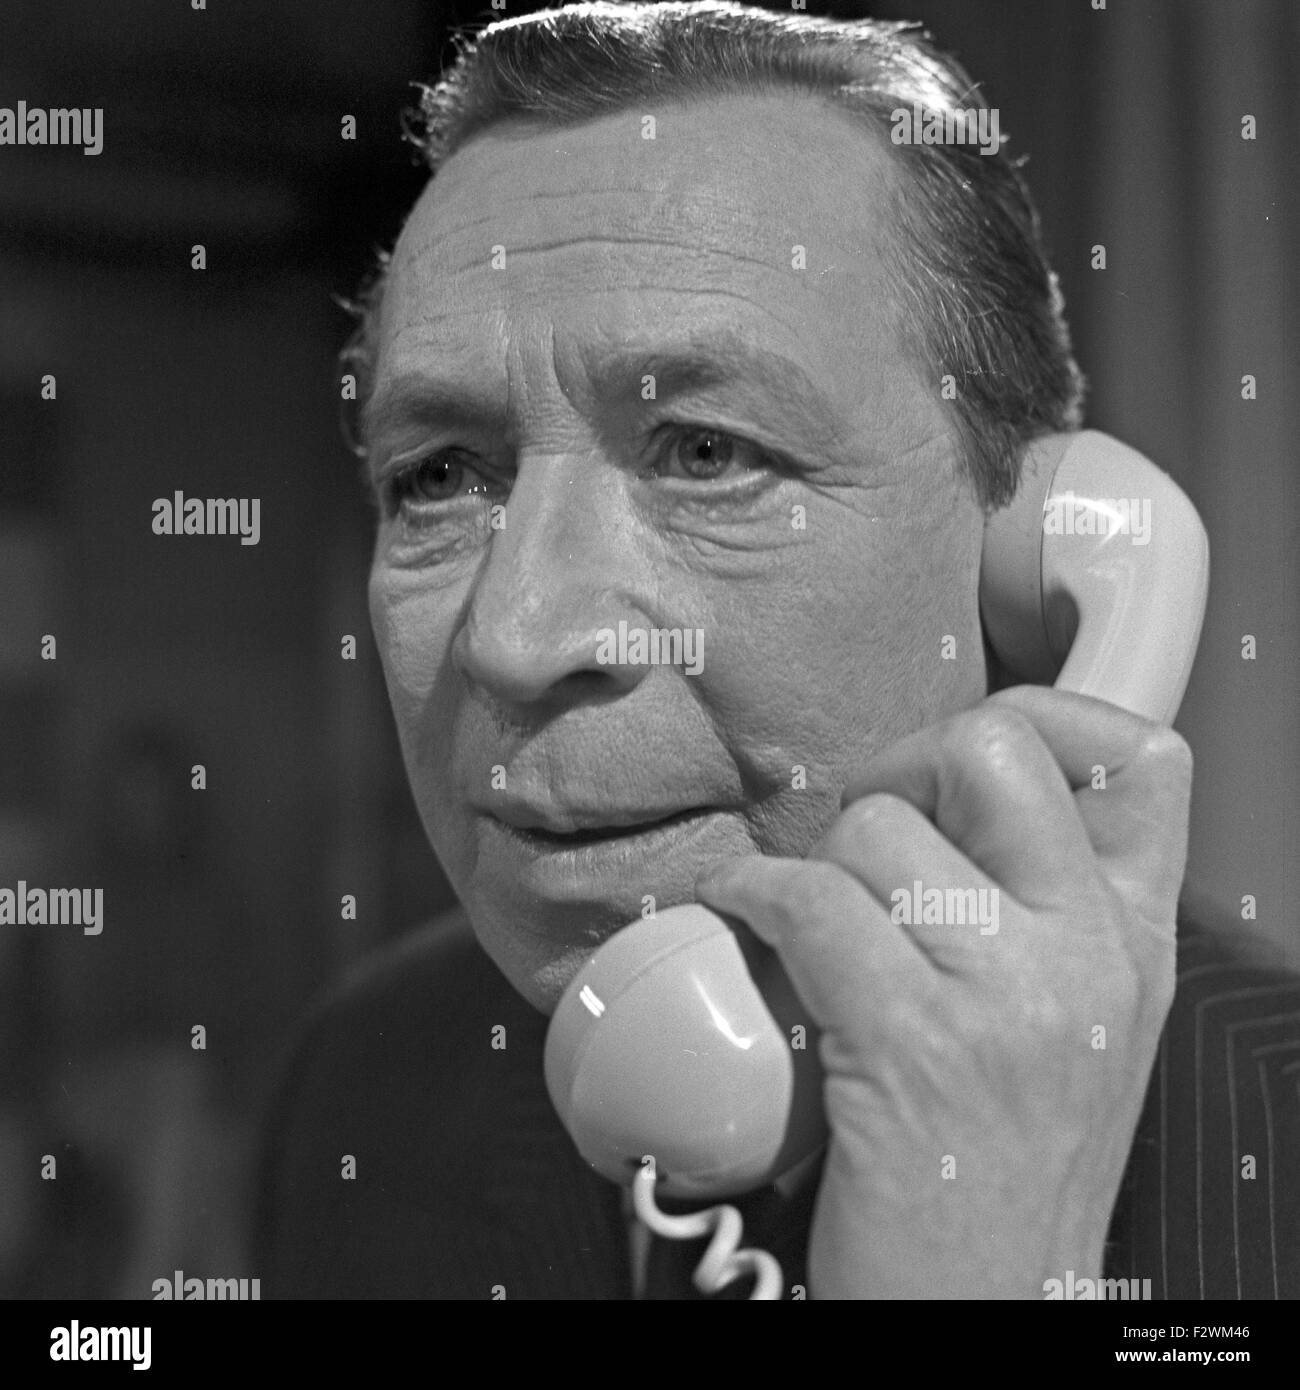 Flamingo-Club, Fernsehserie, Deutschland 1967, Szenenfoto am Telefon Stock Photo